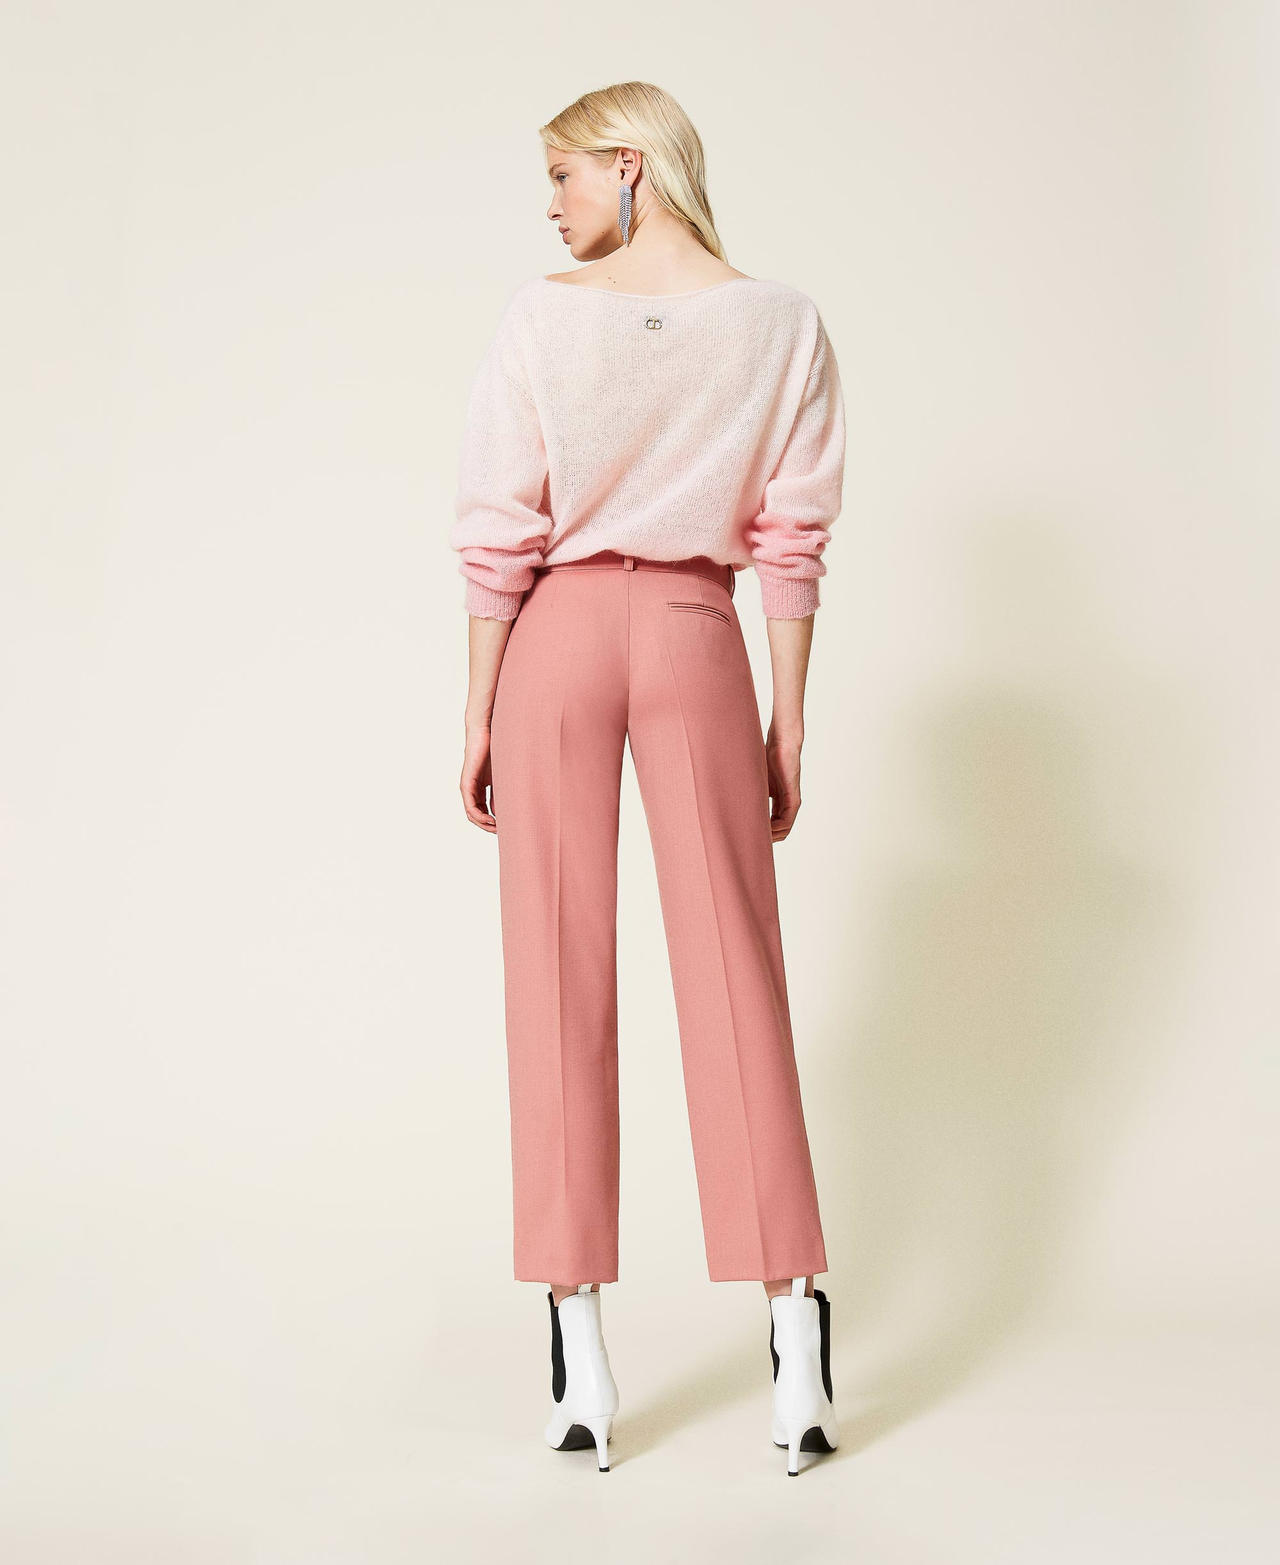 Wool trousers Canyon Pink Woman 212TP2491-03